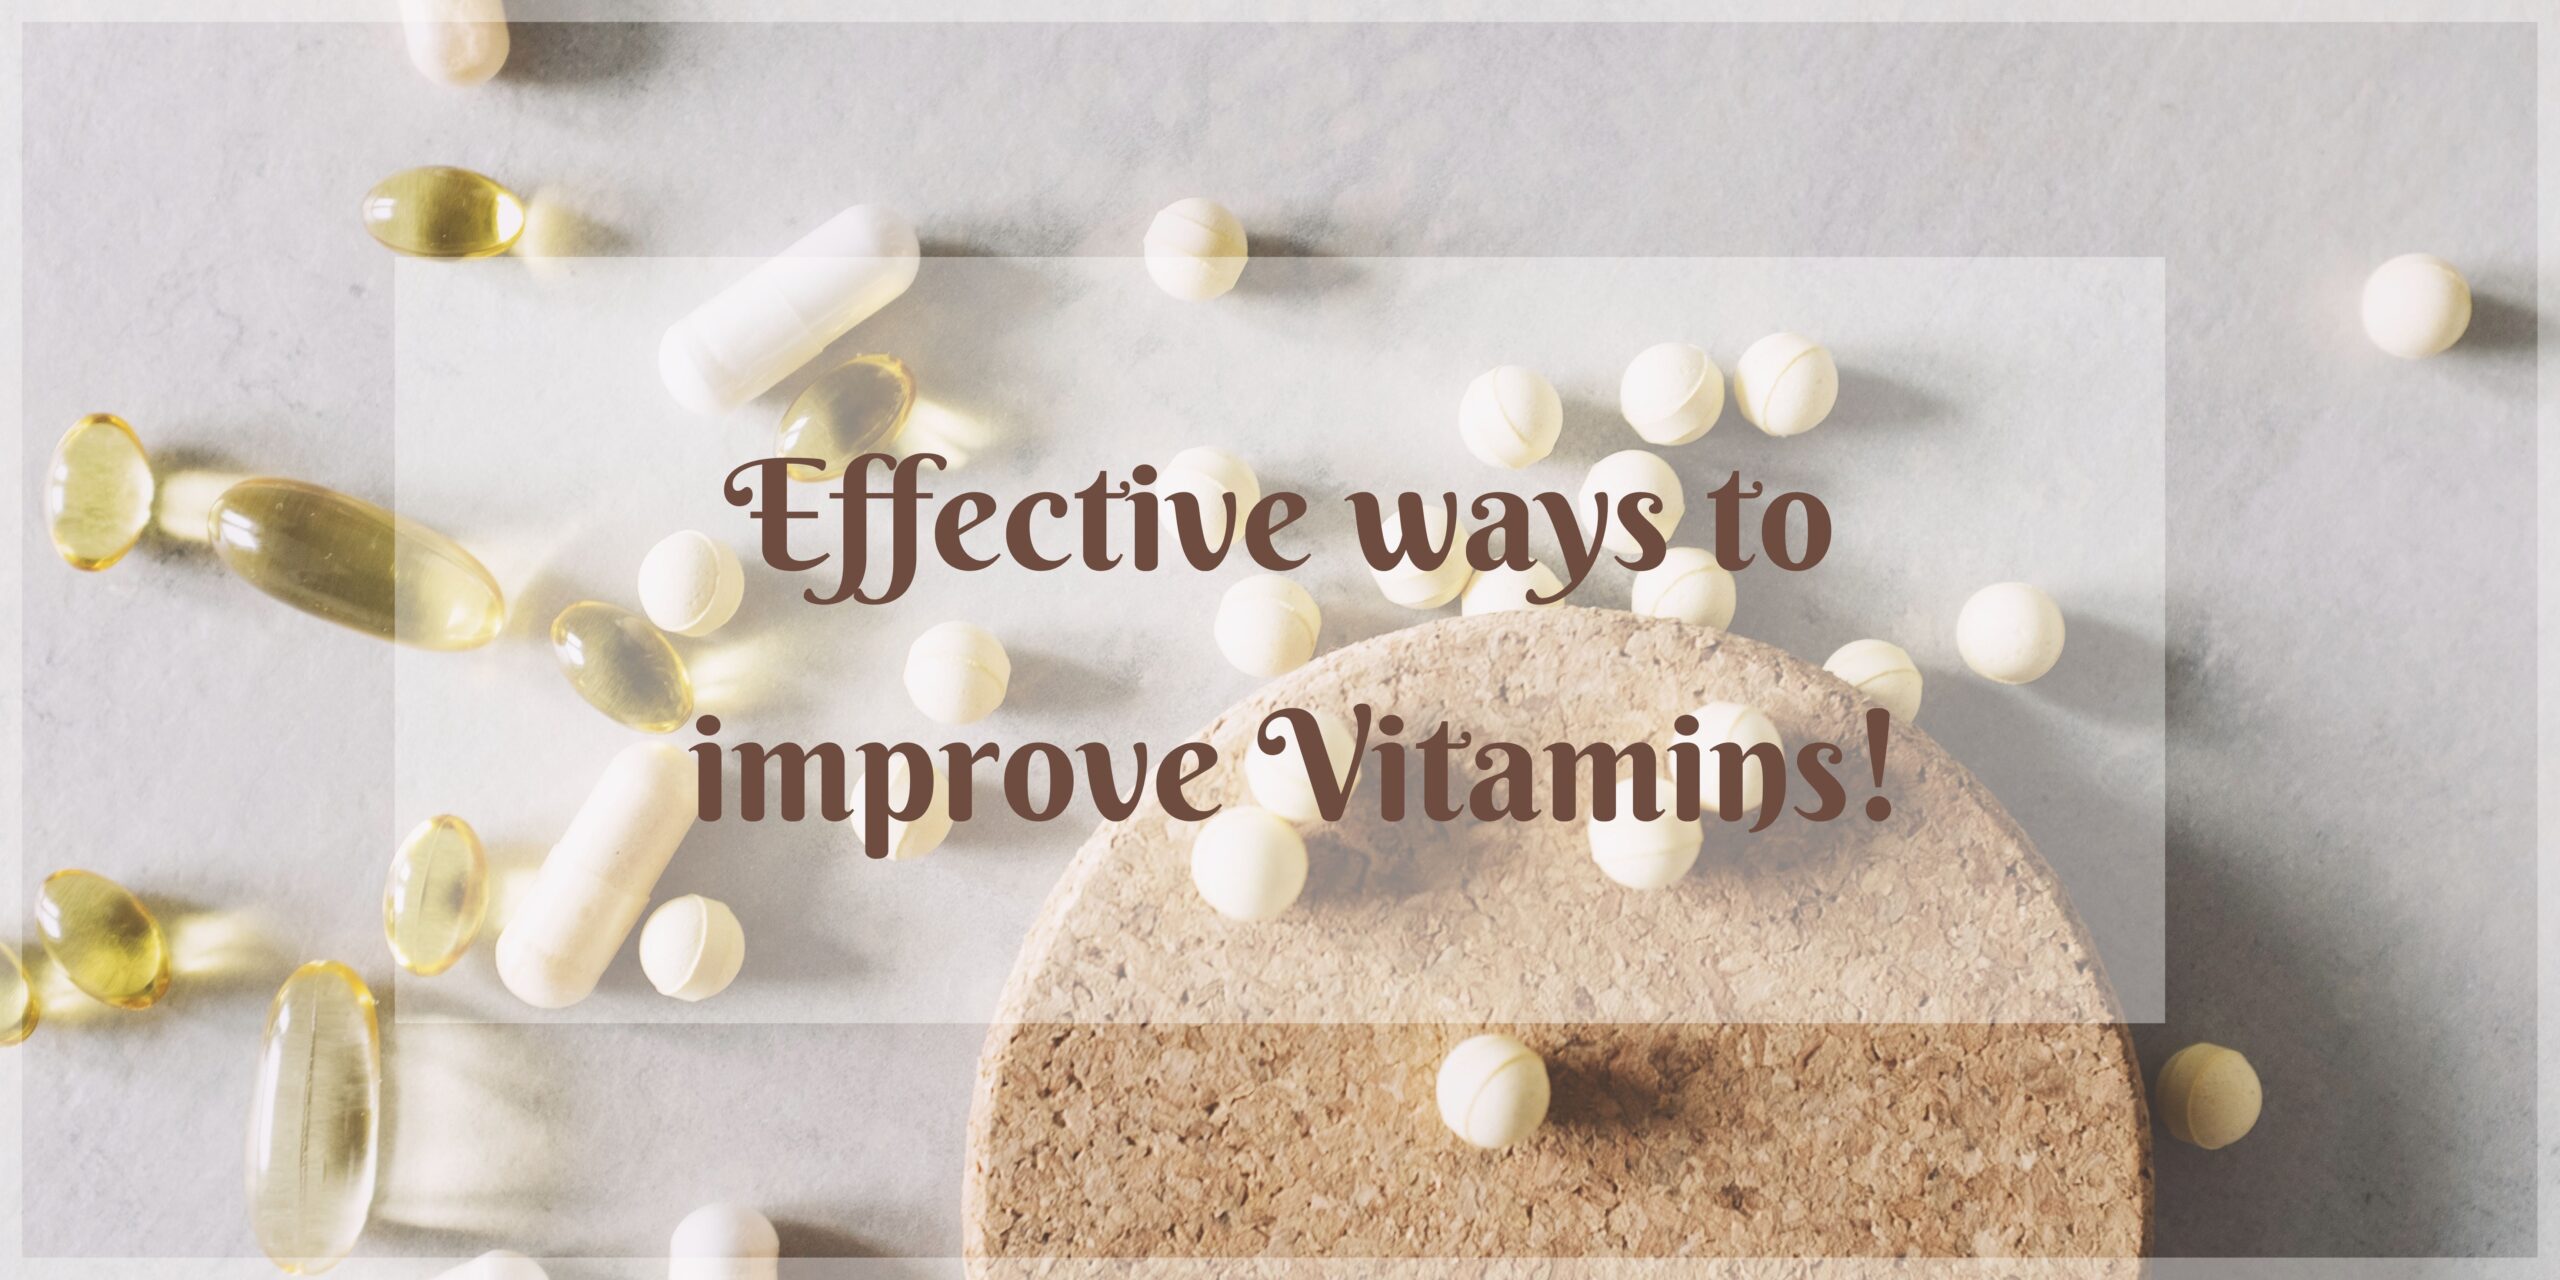 Effective ways to improve Vitamins!